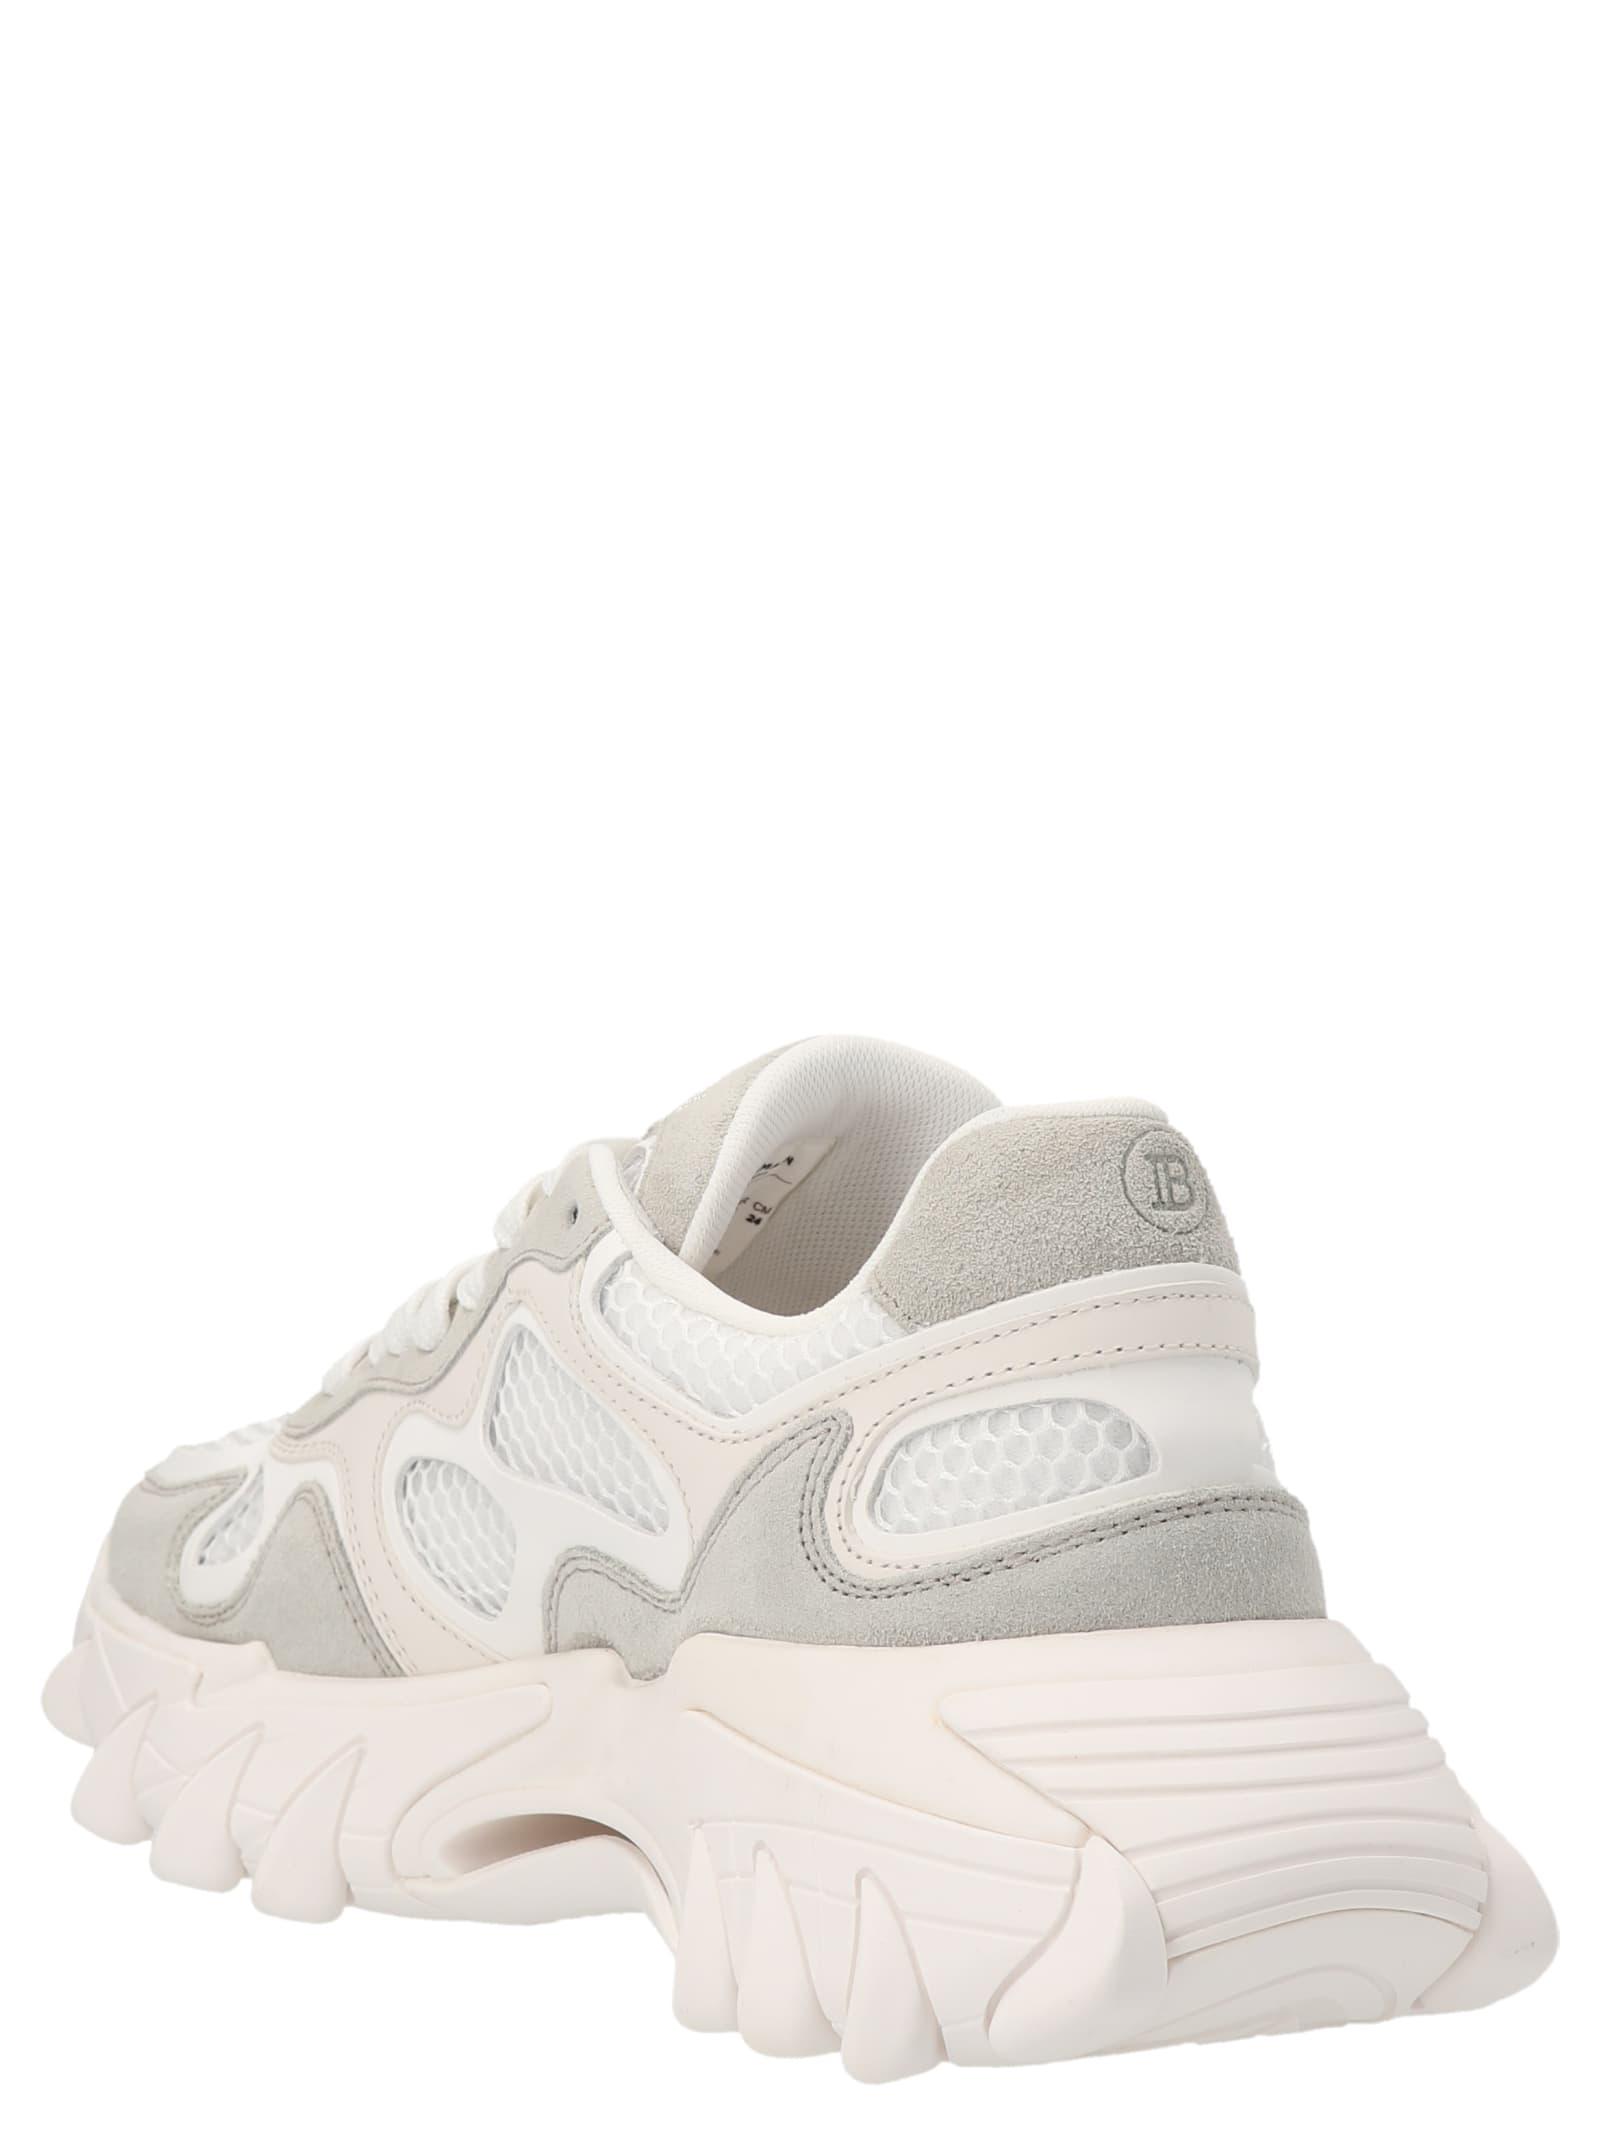 Balmain B-east Sneakers in White | Lyst